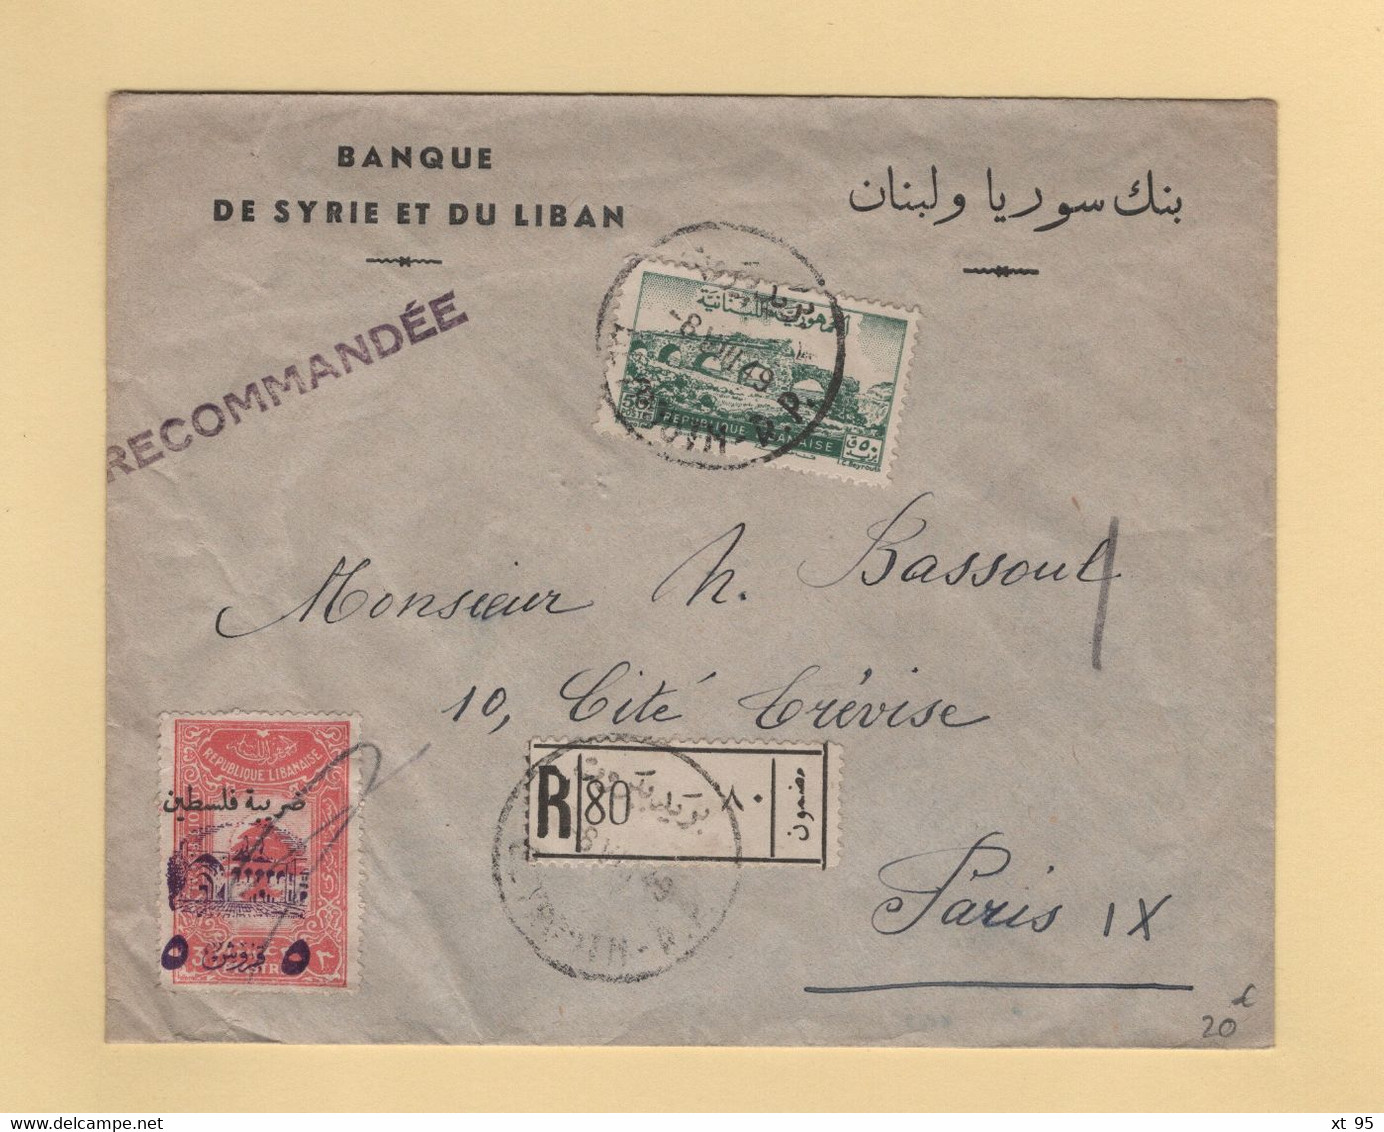 Liban - Beyrouth - 1949 - Recommande Par Avion Destination France - Liban